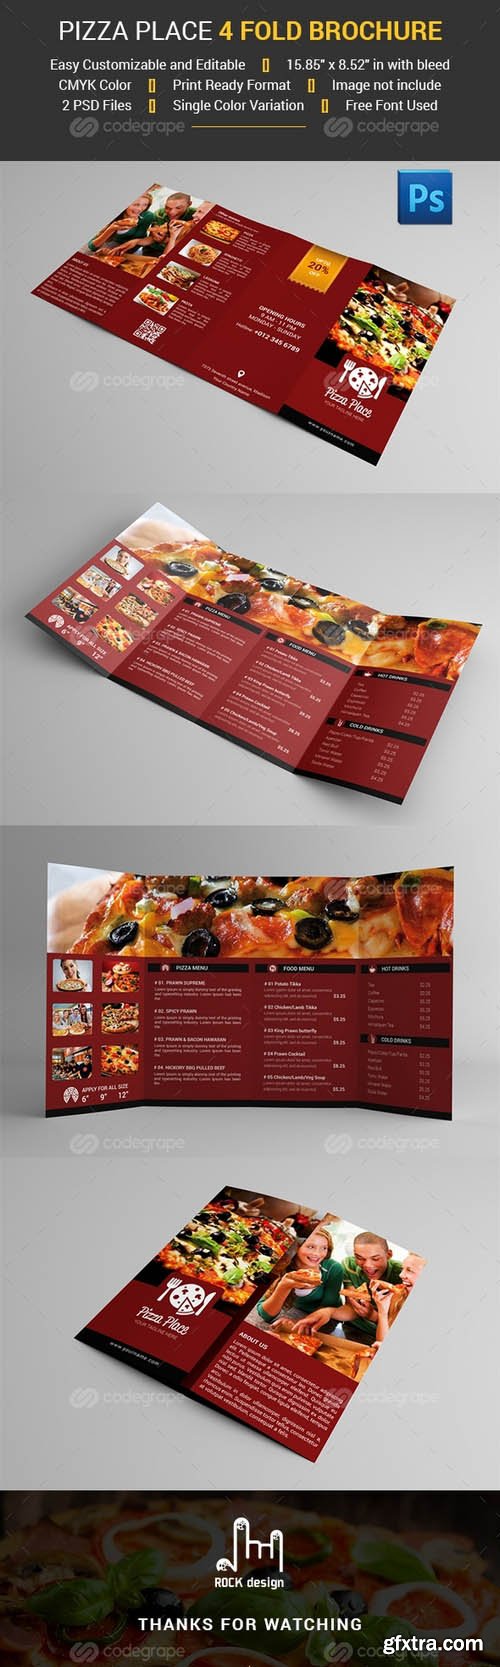 4 Fold Pizza Place Brochure 8747